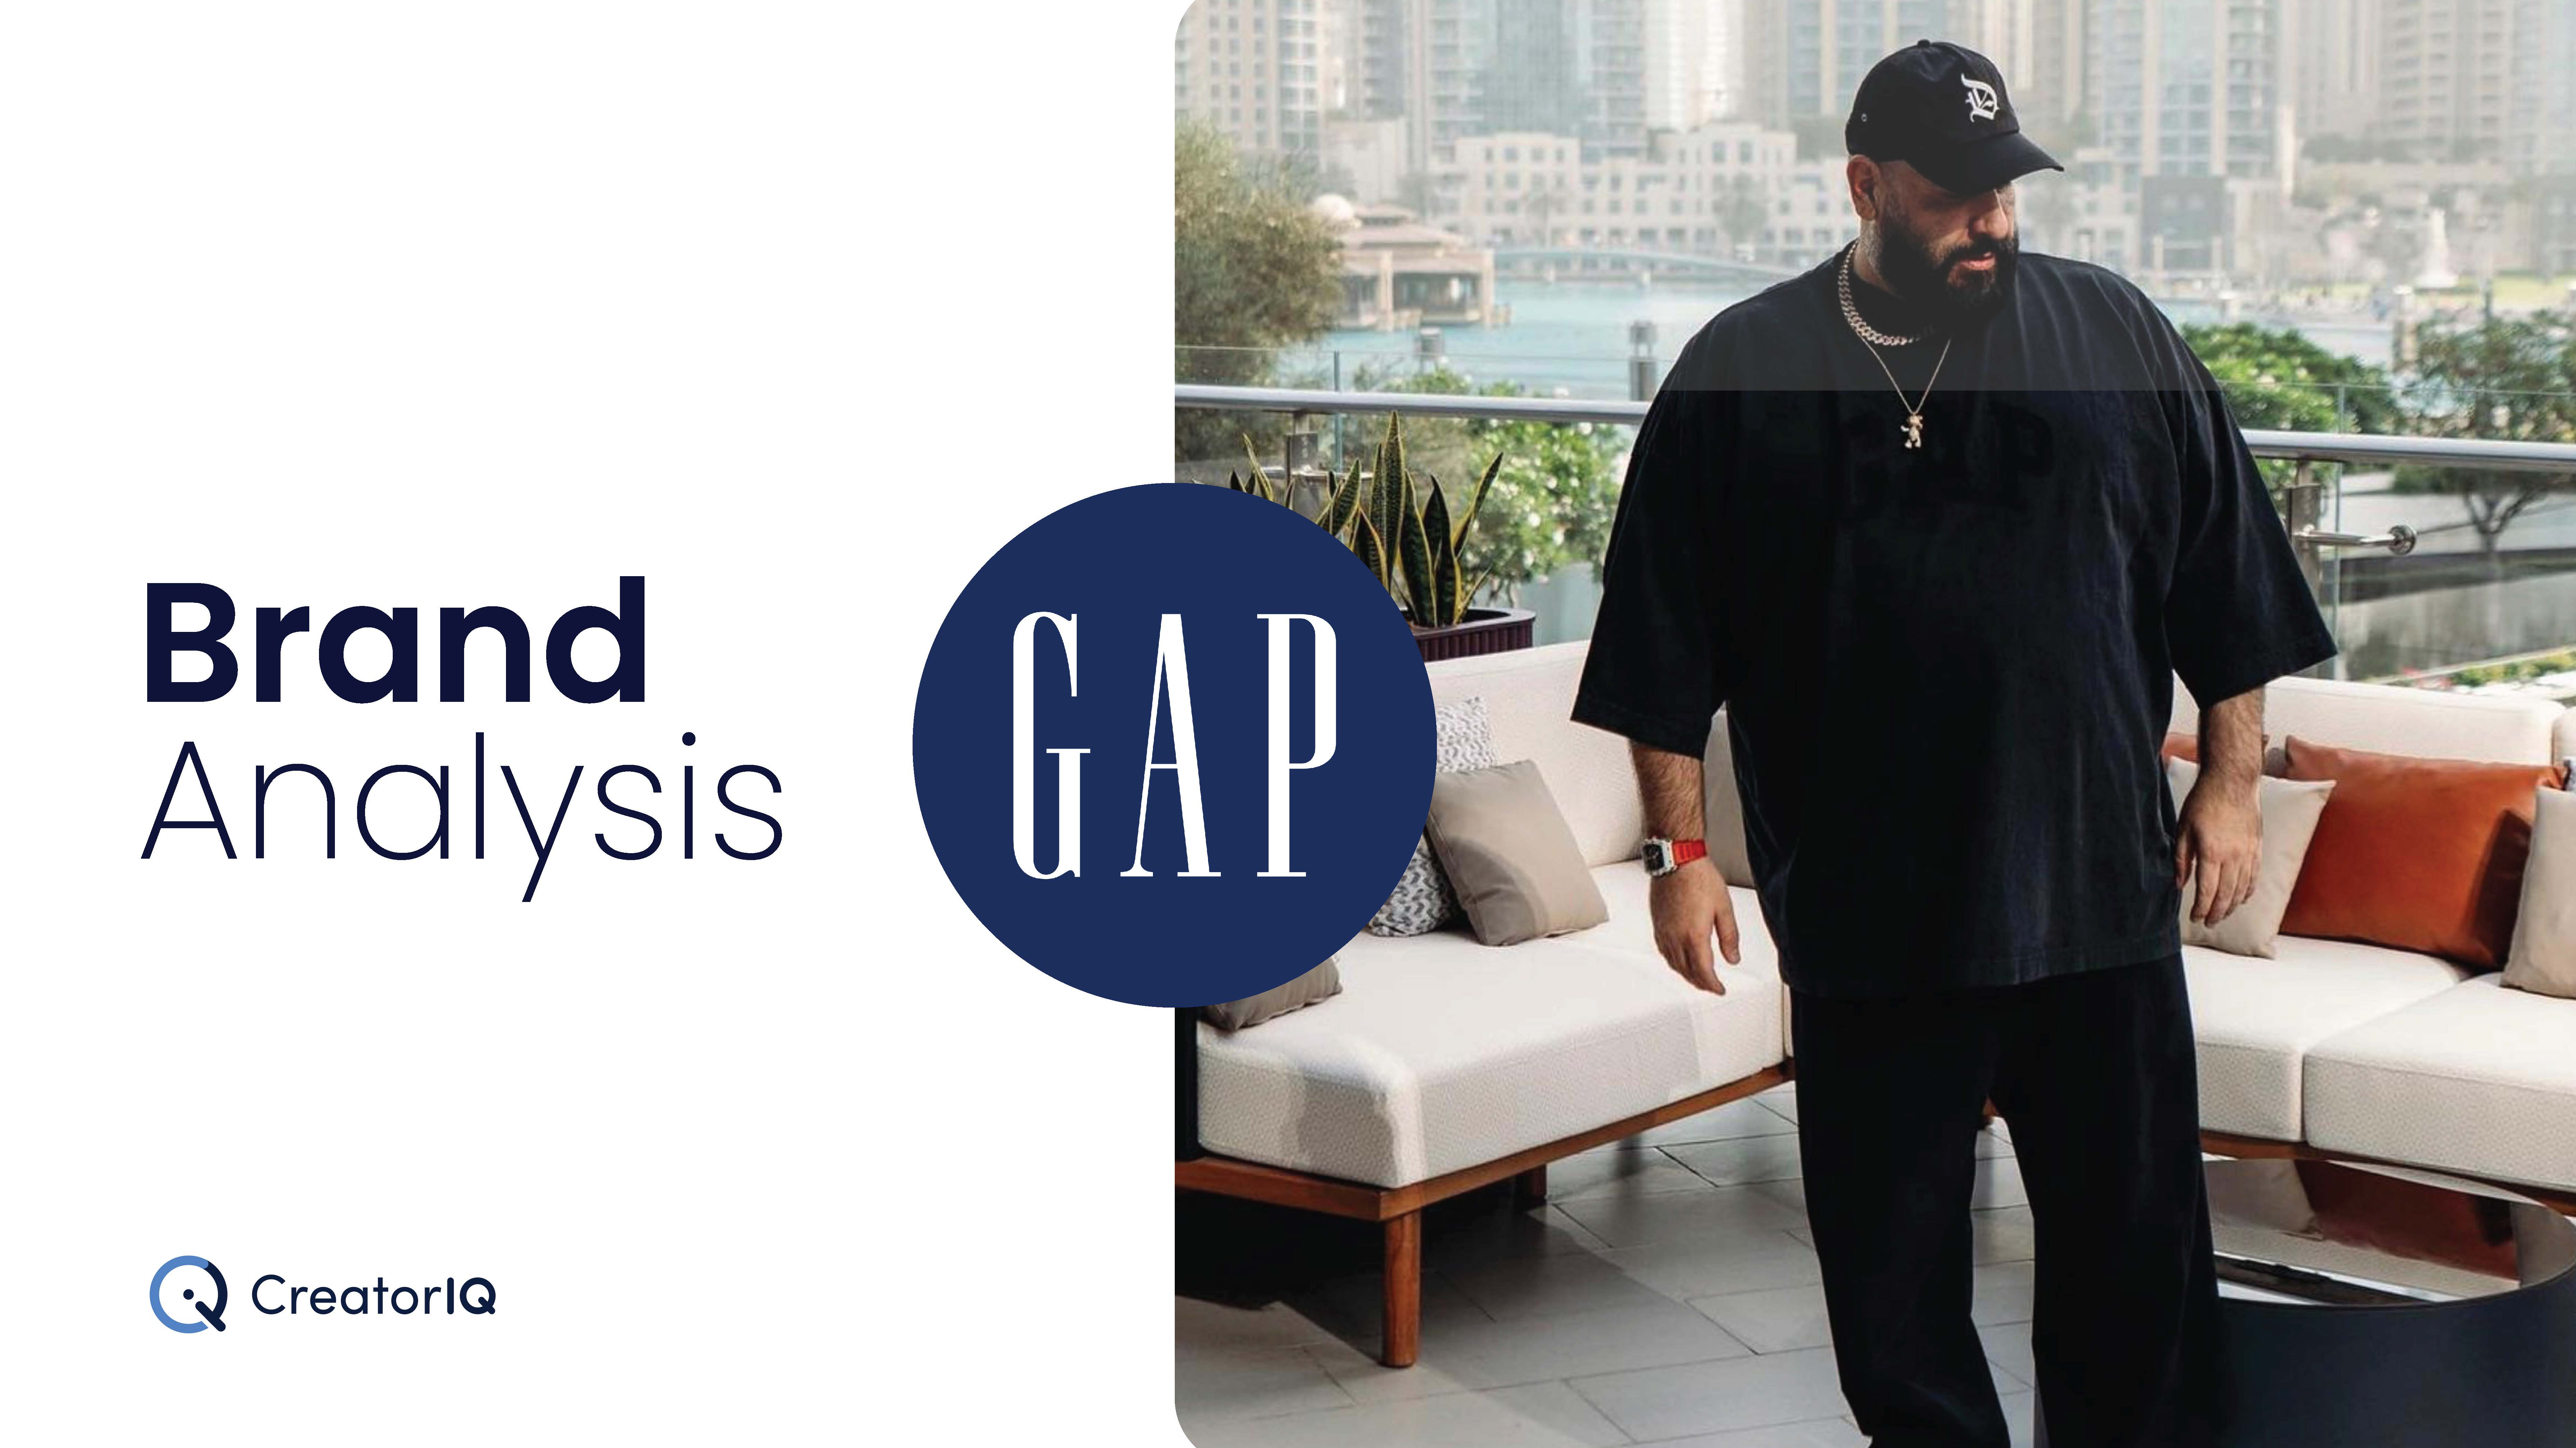 Brand Analysis: GAP